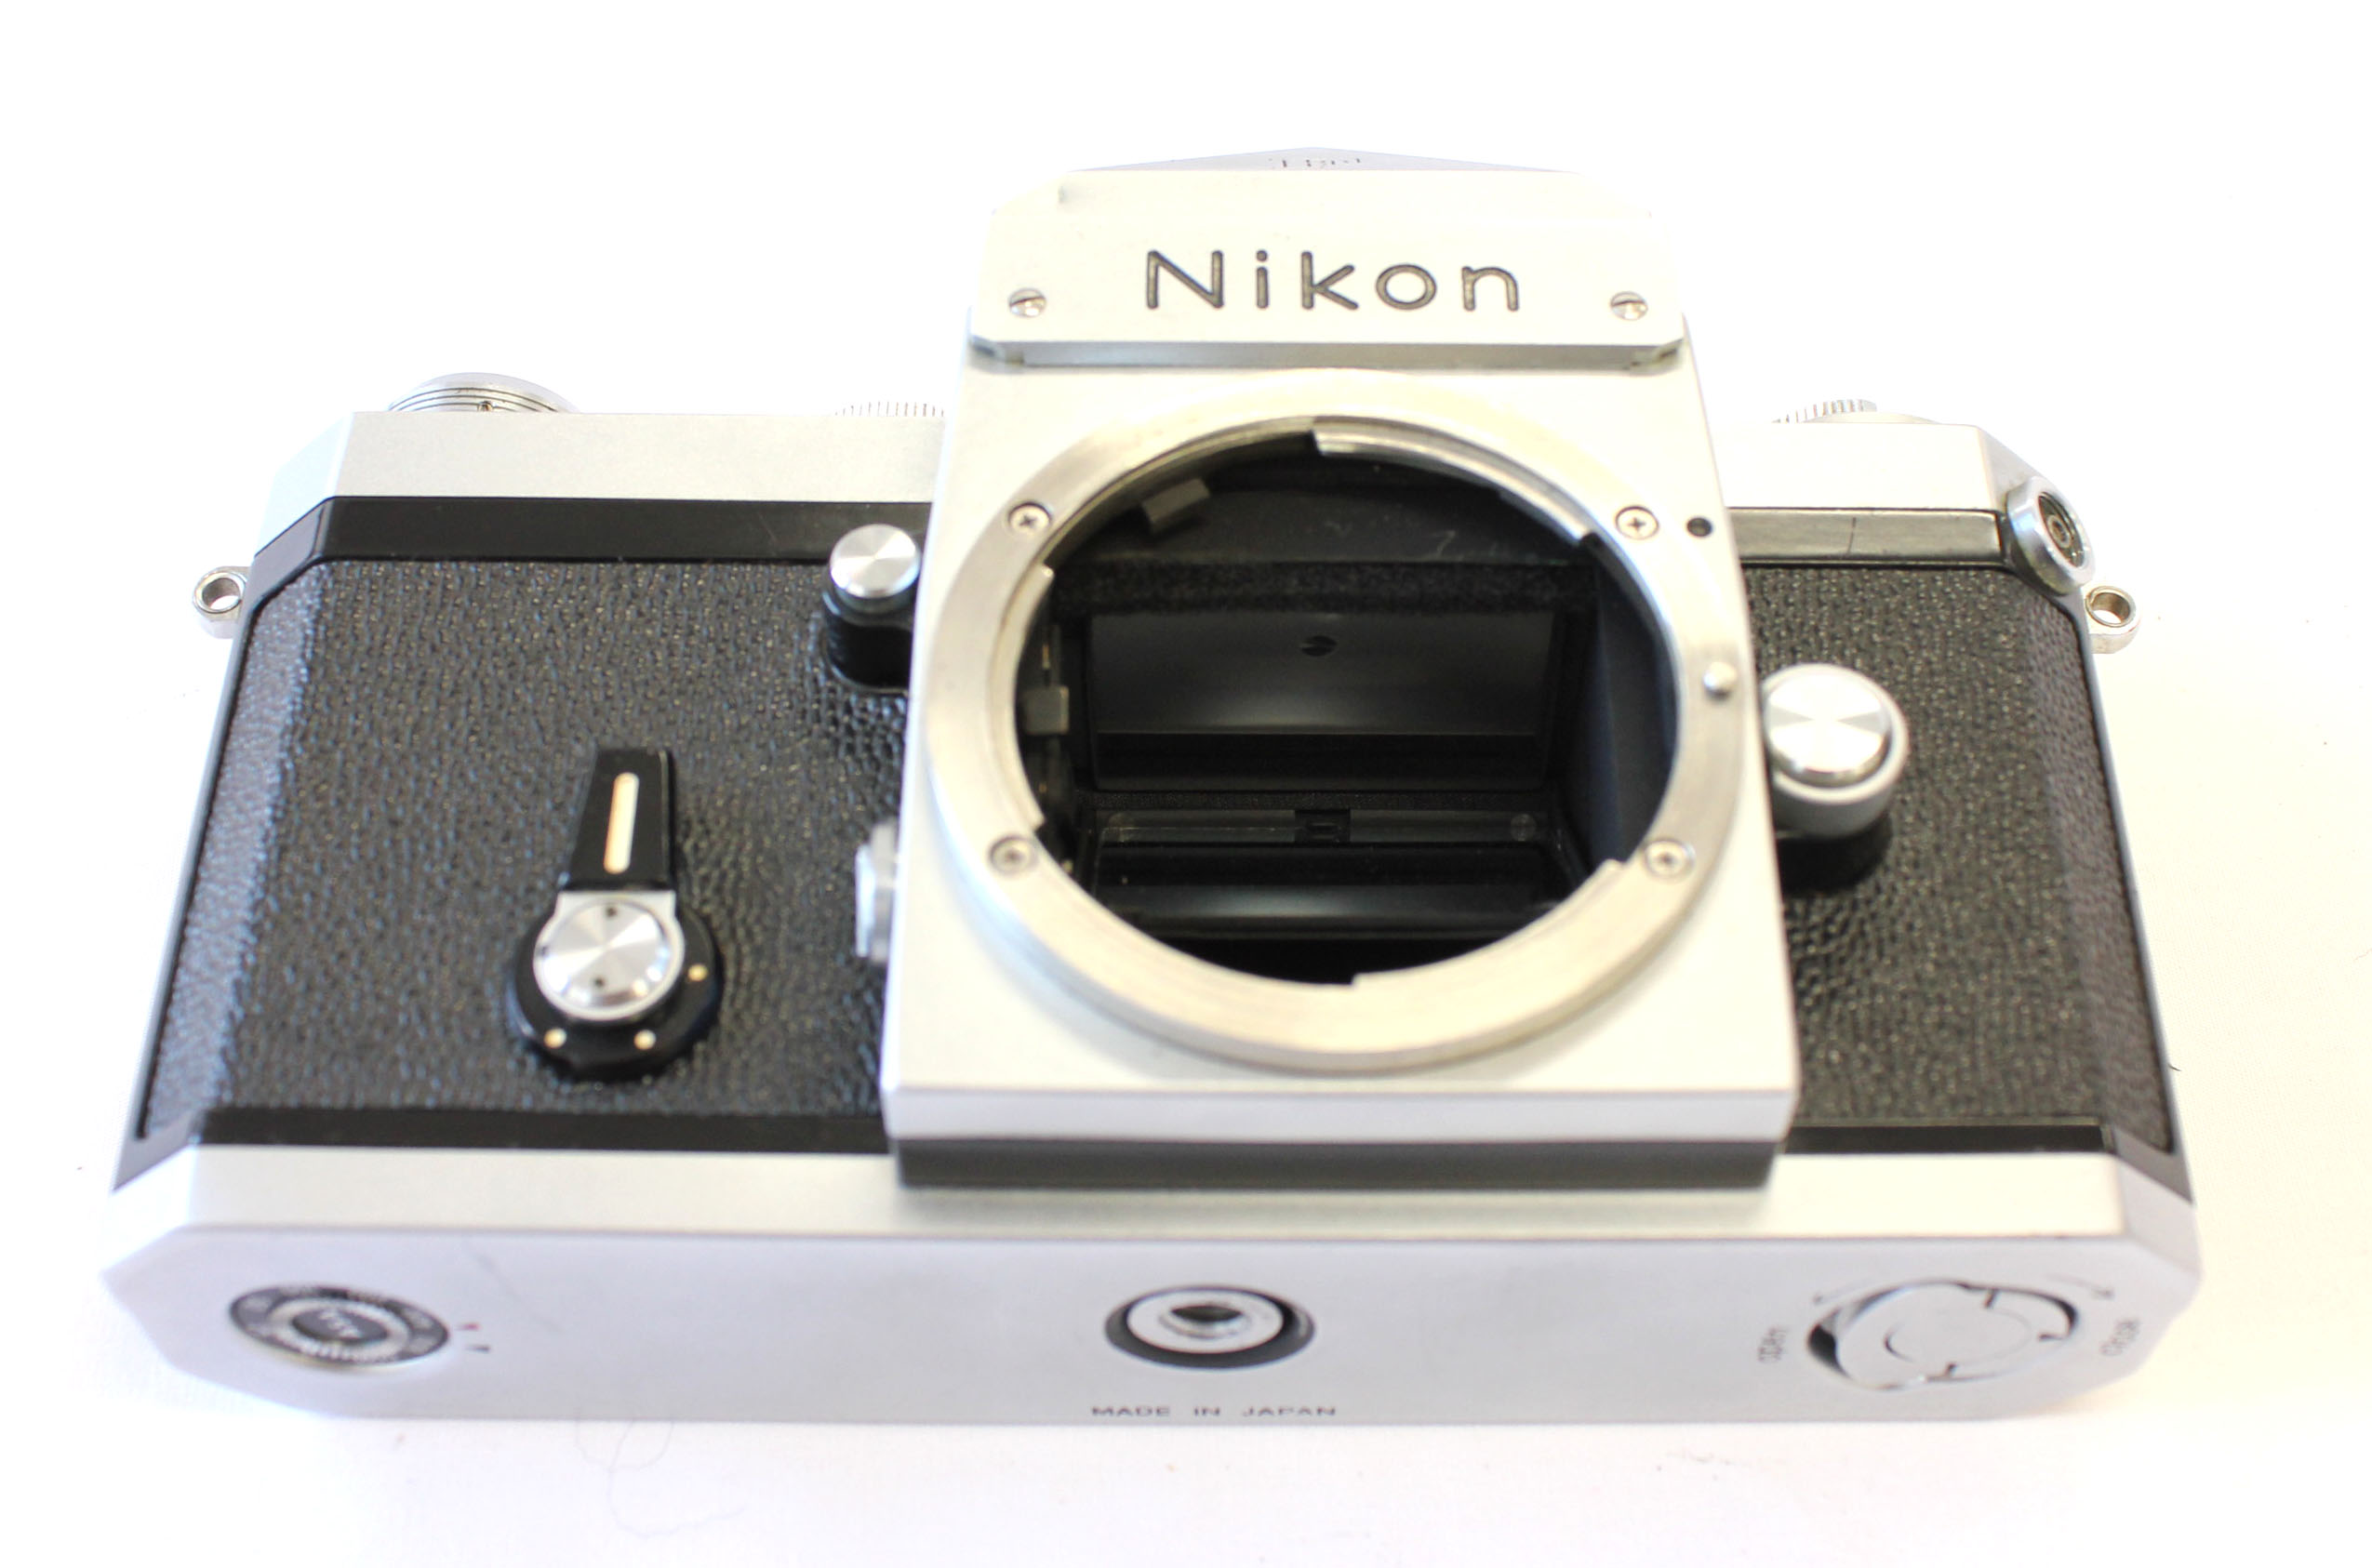  Nikon Apollo New F Eye Level 35mm SLR Film Camera S/N 742* from Japan Photo 8